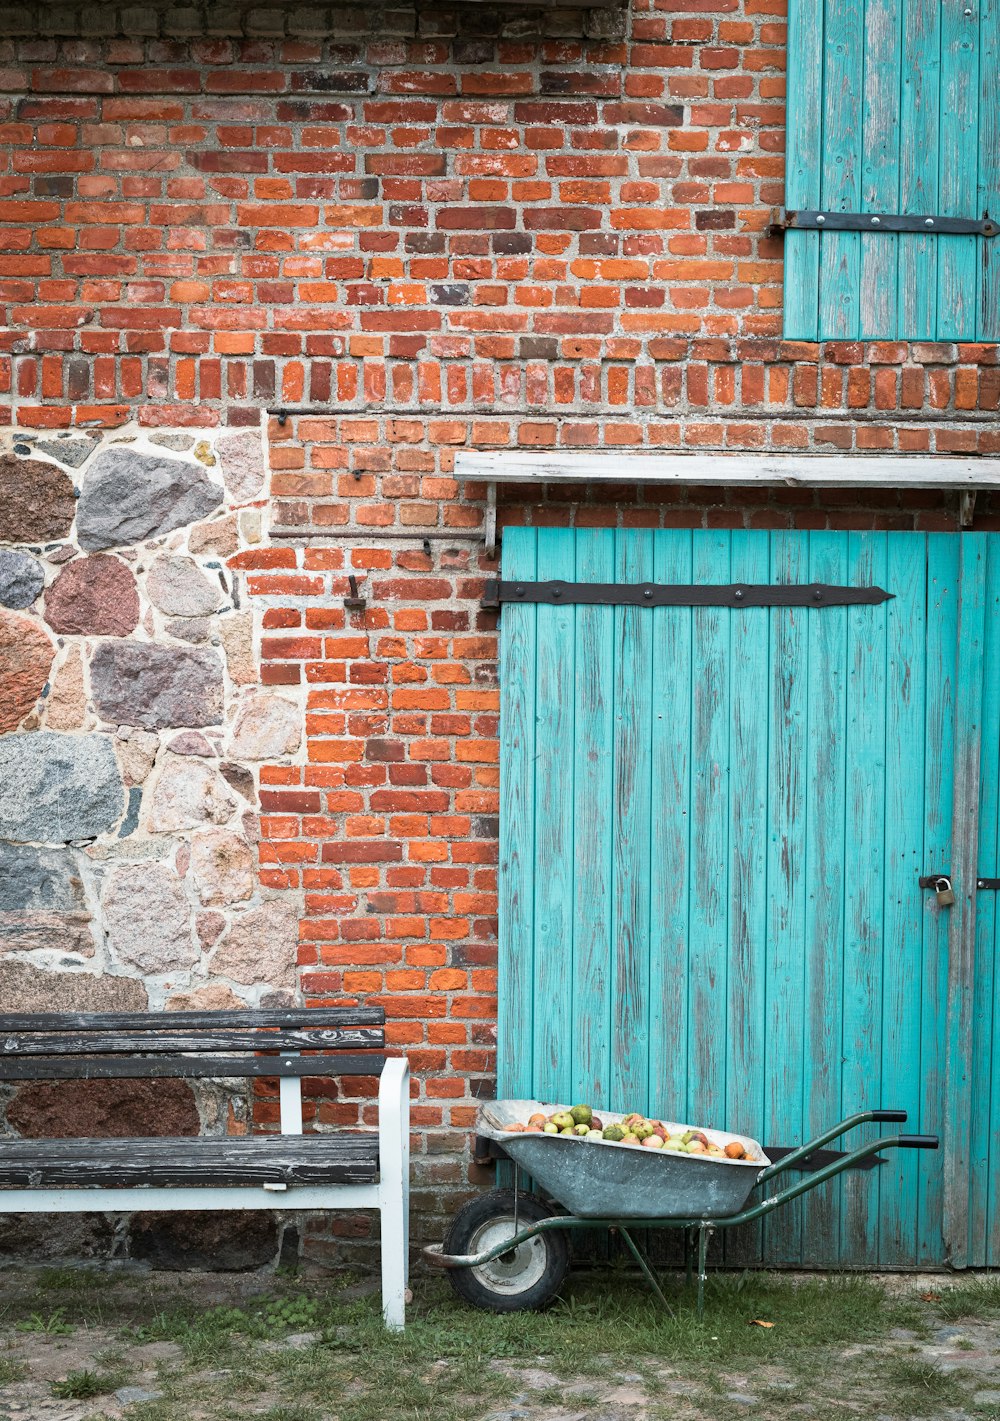 a wheelbarrow next to a brick building with a blue door